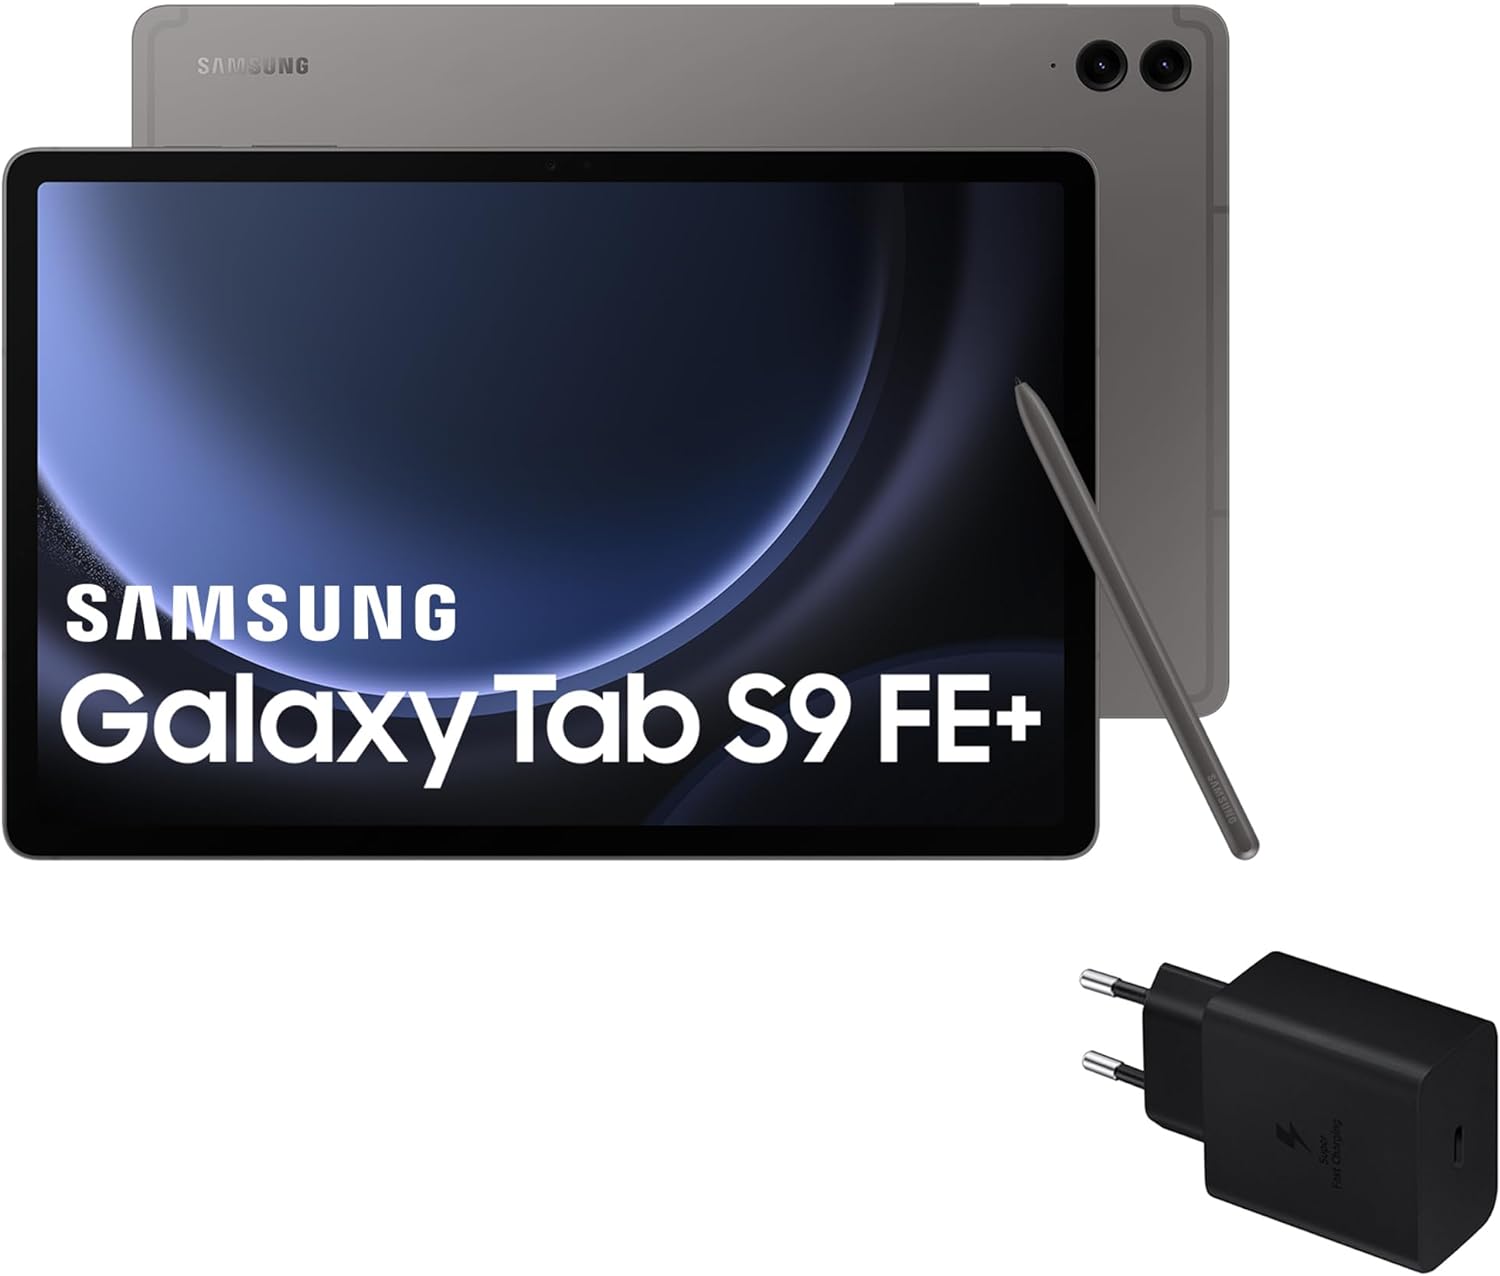 Samsung Galaxy Tab S9 FE+ vs Samsung Galaxy Tab S9 vs Samsung Galaxy Tab S9 FE+